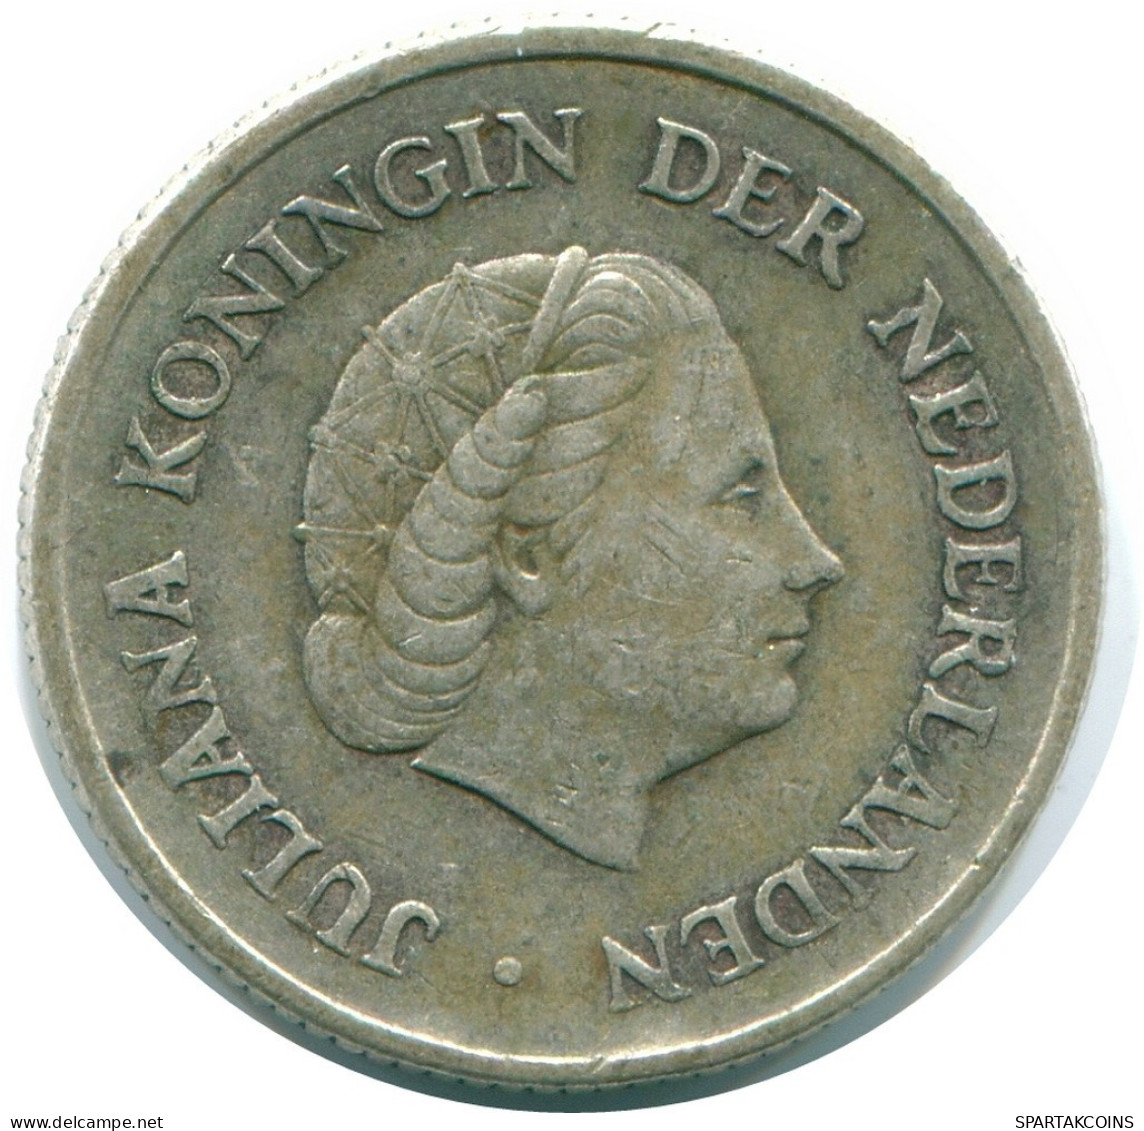 1/4 GULDEN 1967 NETHERLANDS ANTILLES SILVER Colonial Coin #NL11597.4.U.A - Niederländische Antillen